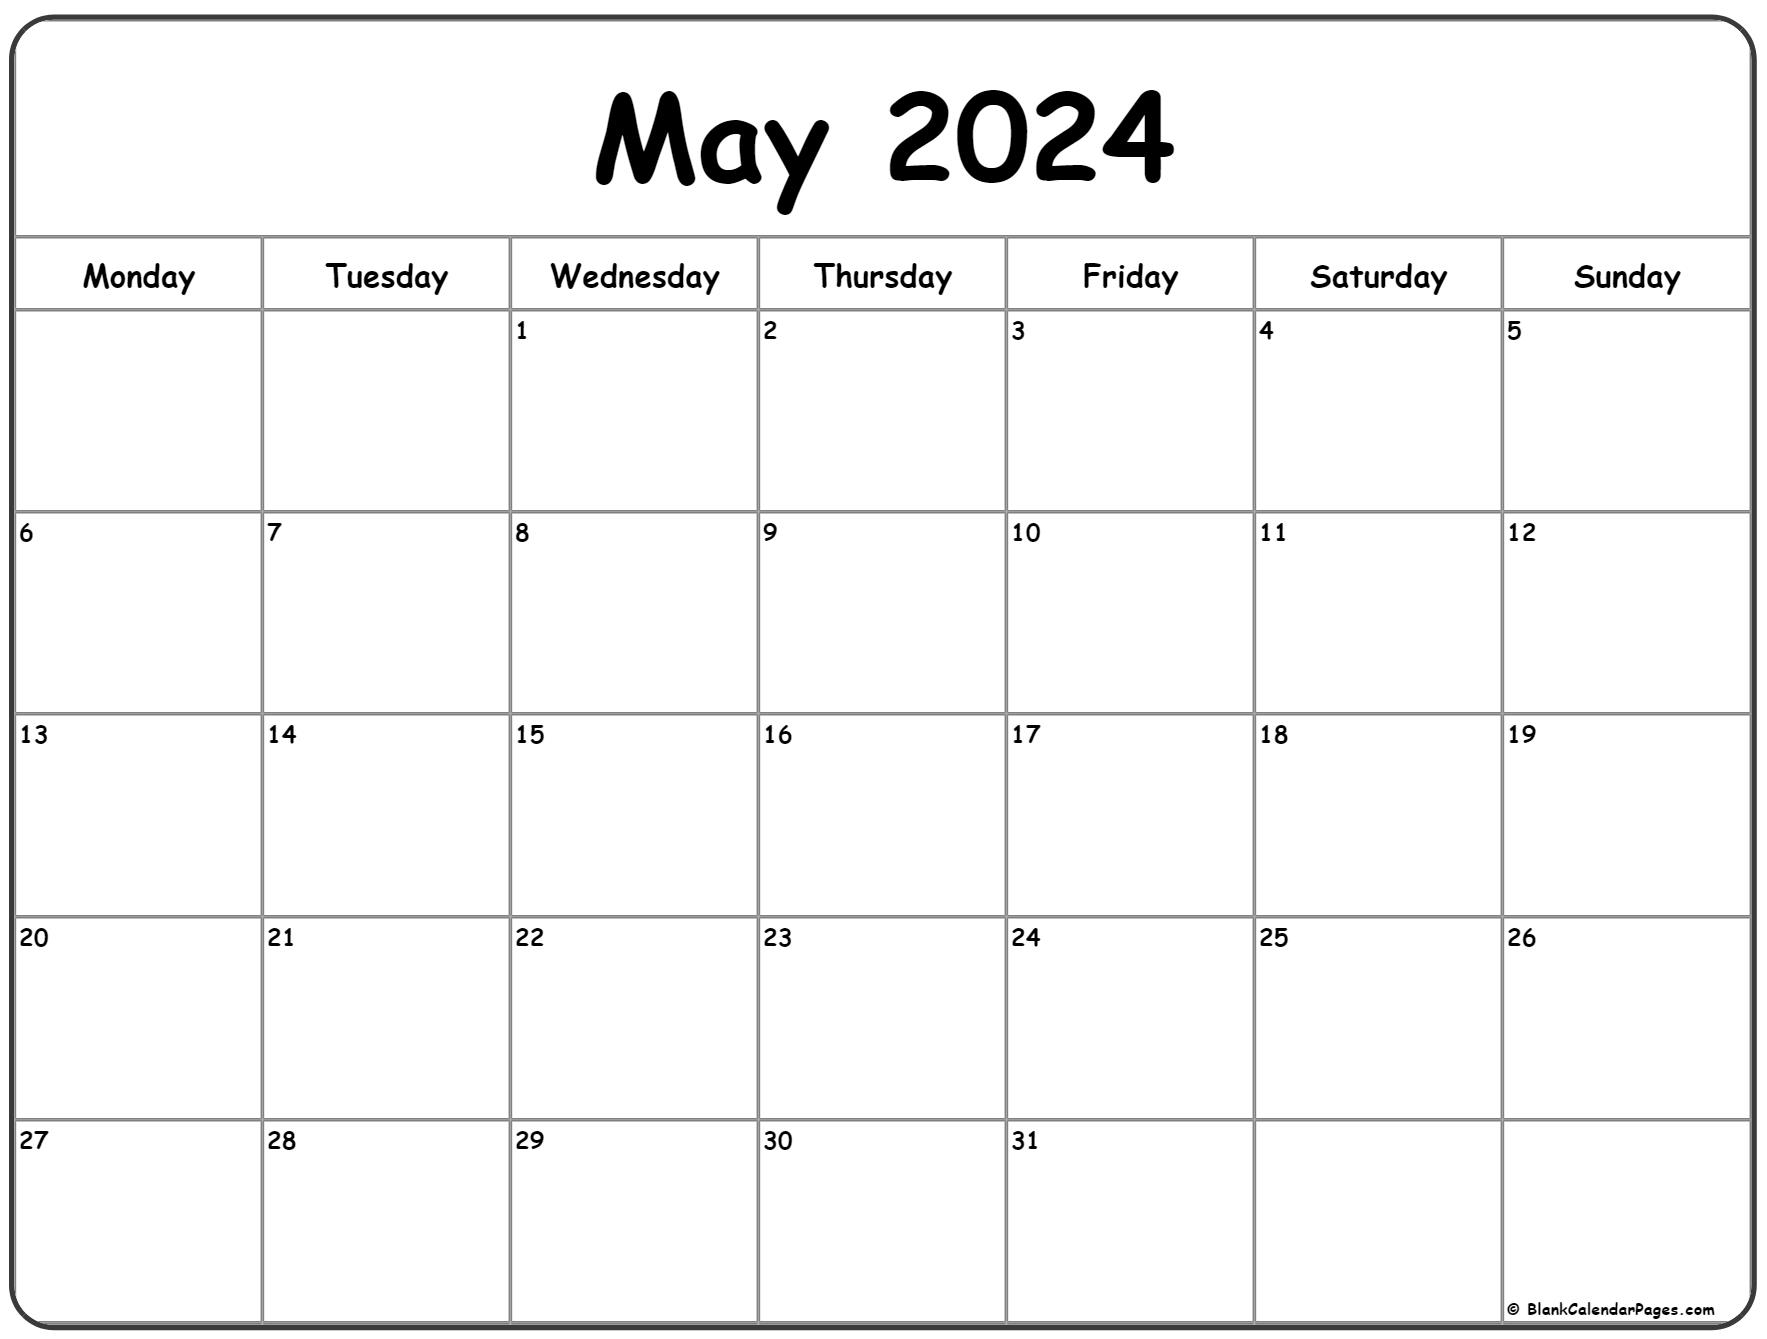 Calendar For May 2021 May 2021 Monday Calendar | Monday to Sunday